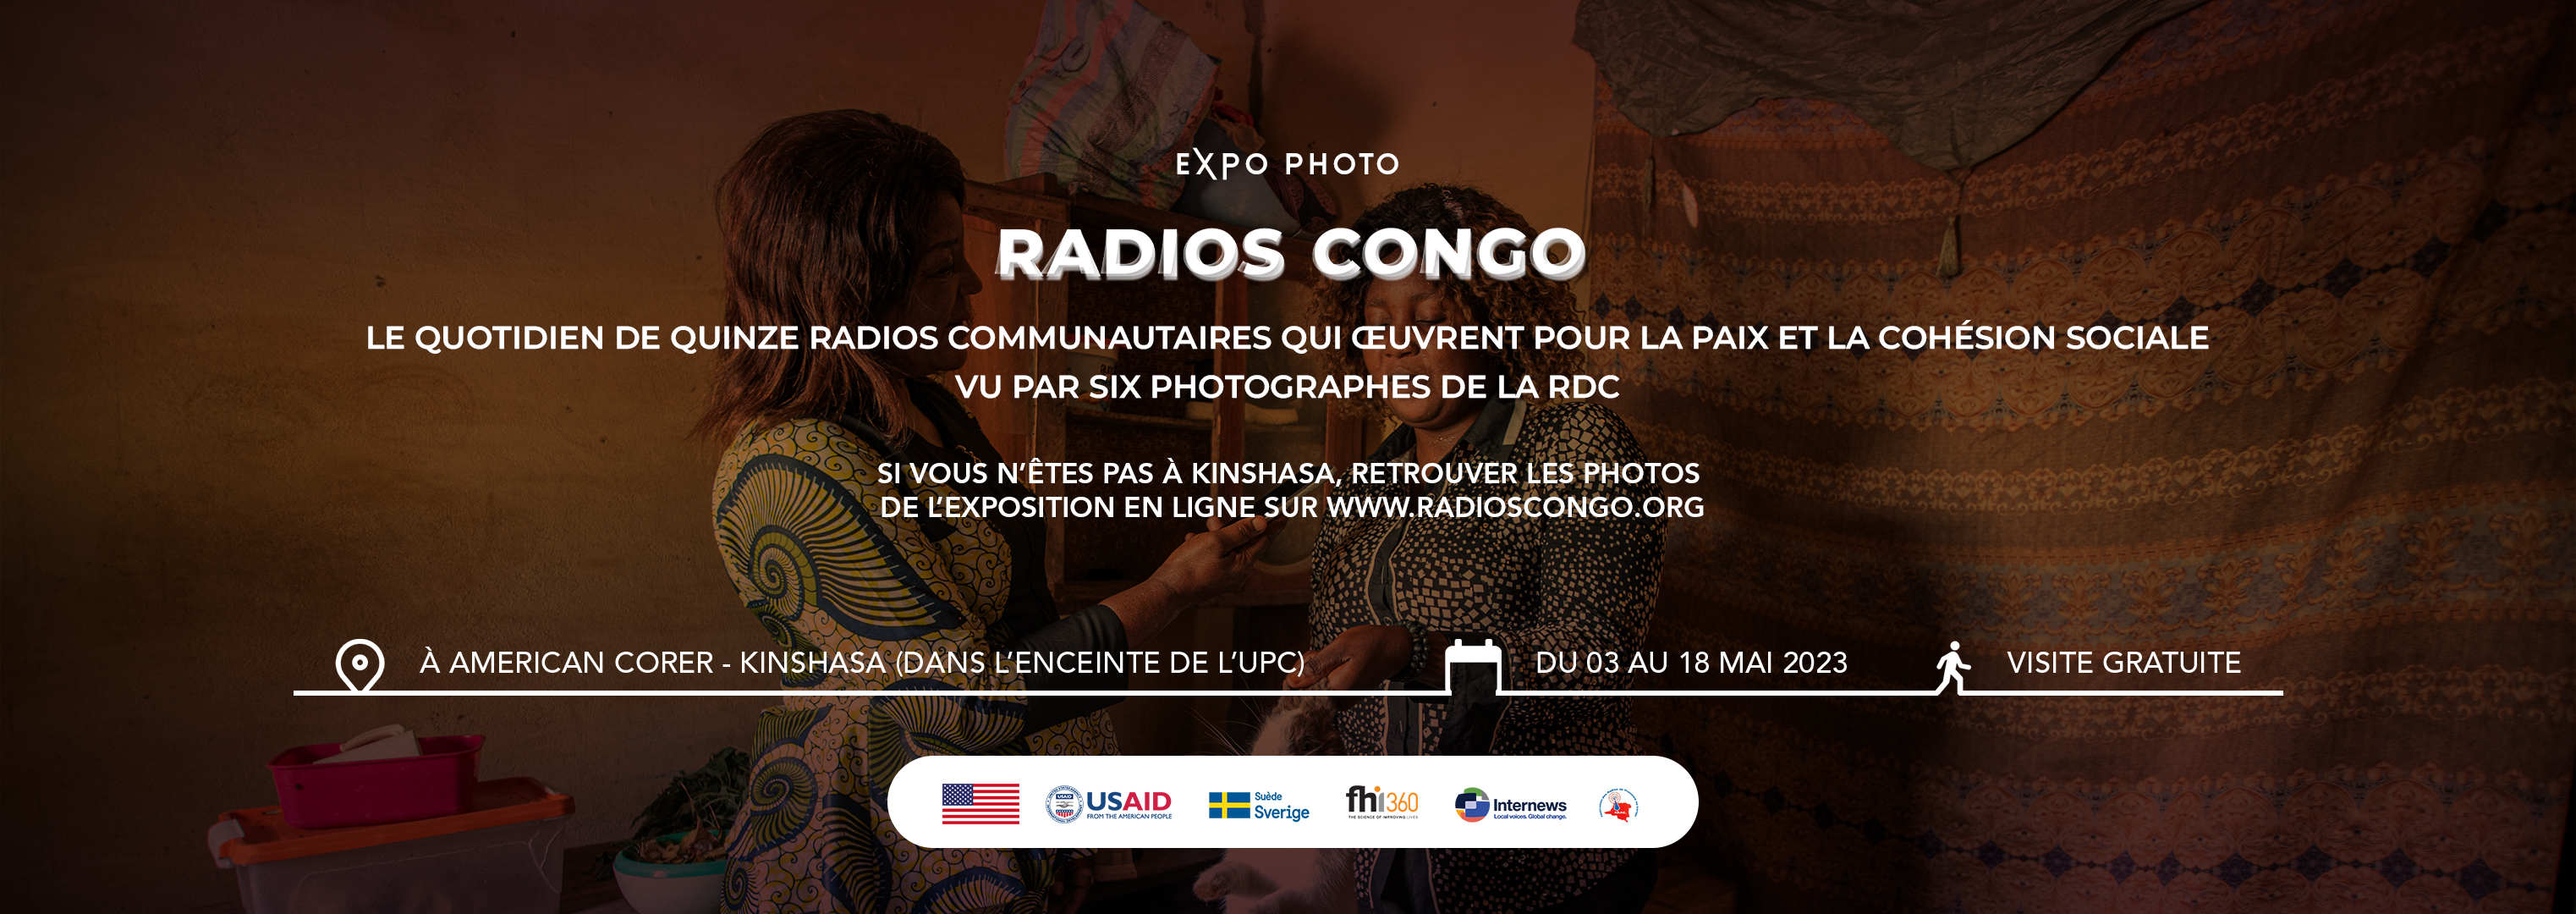 Bannière Radios Congo 